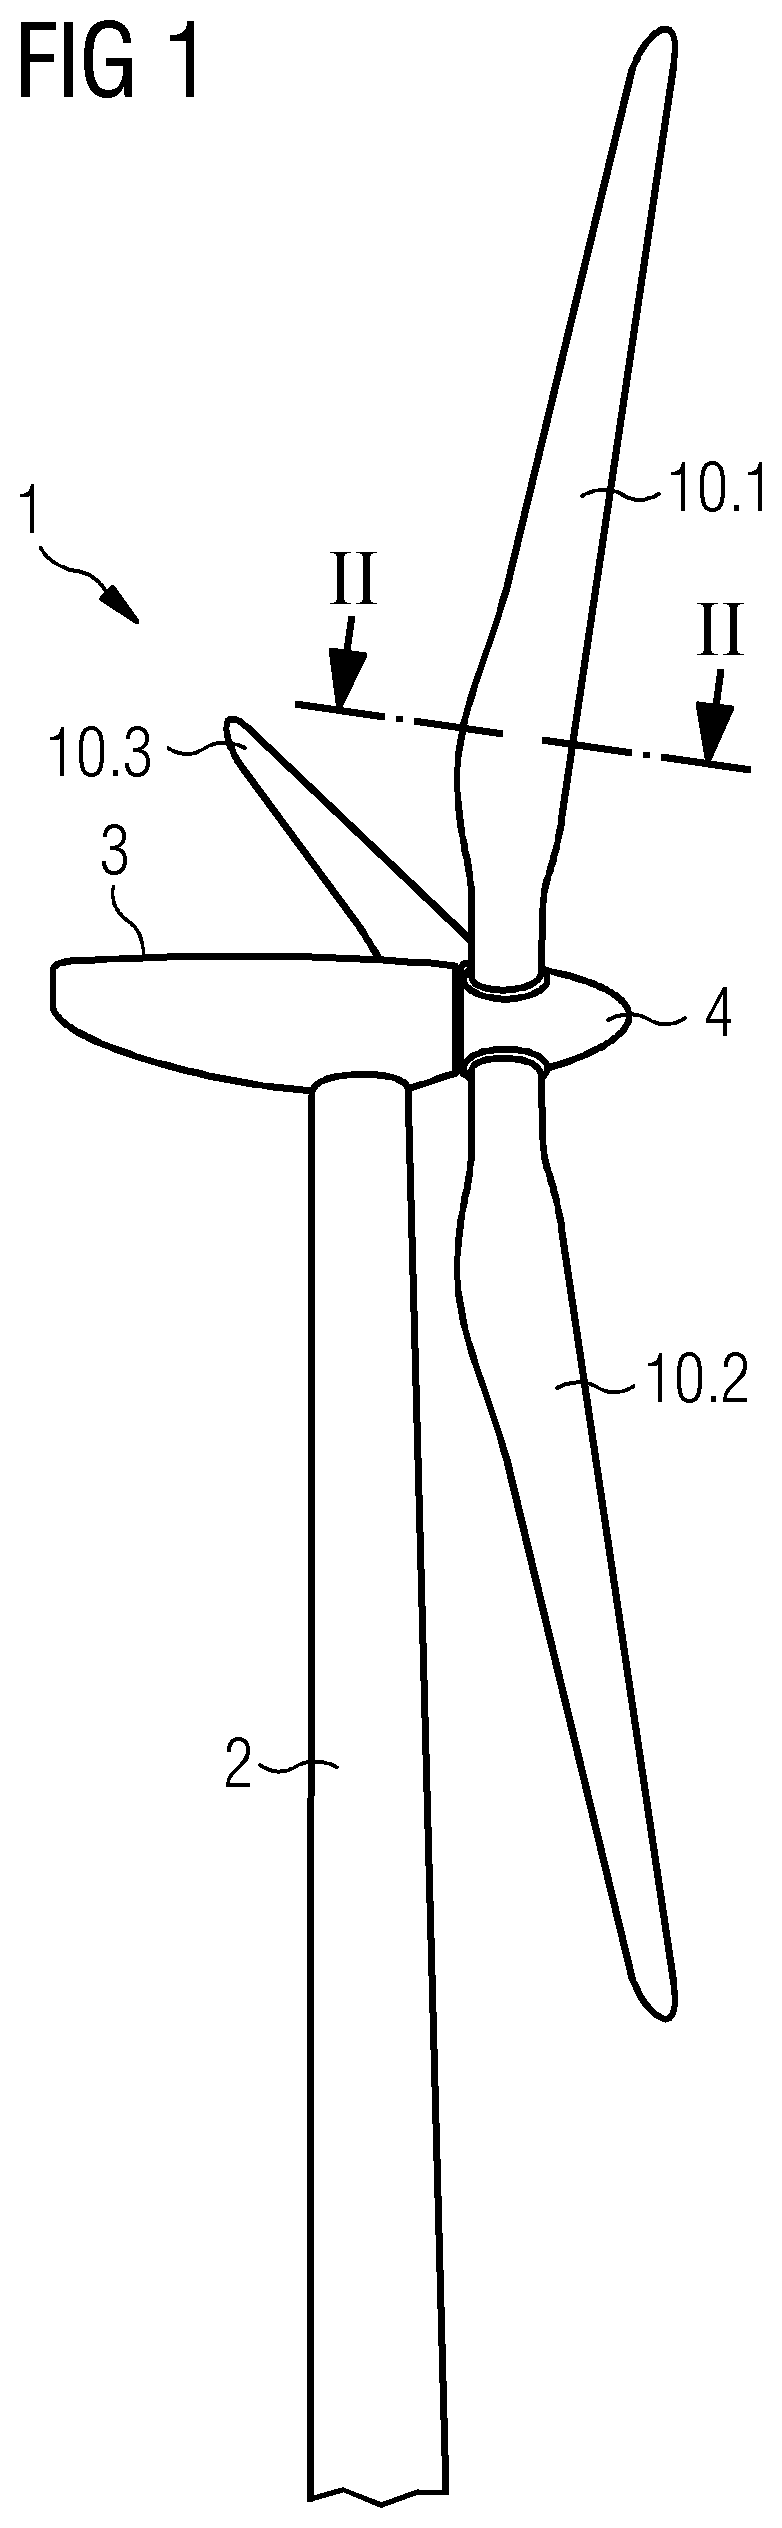 Beam for a wind turbine blade, wind turbine blade, wind turbine, method for manufacturing a beam for a wind turbine blade and method for manufacturing a wind turbine blade